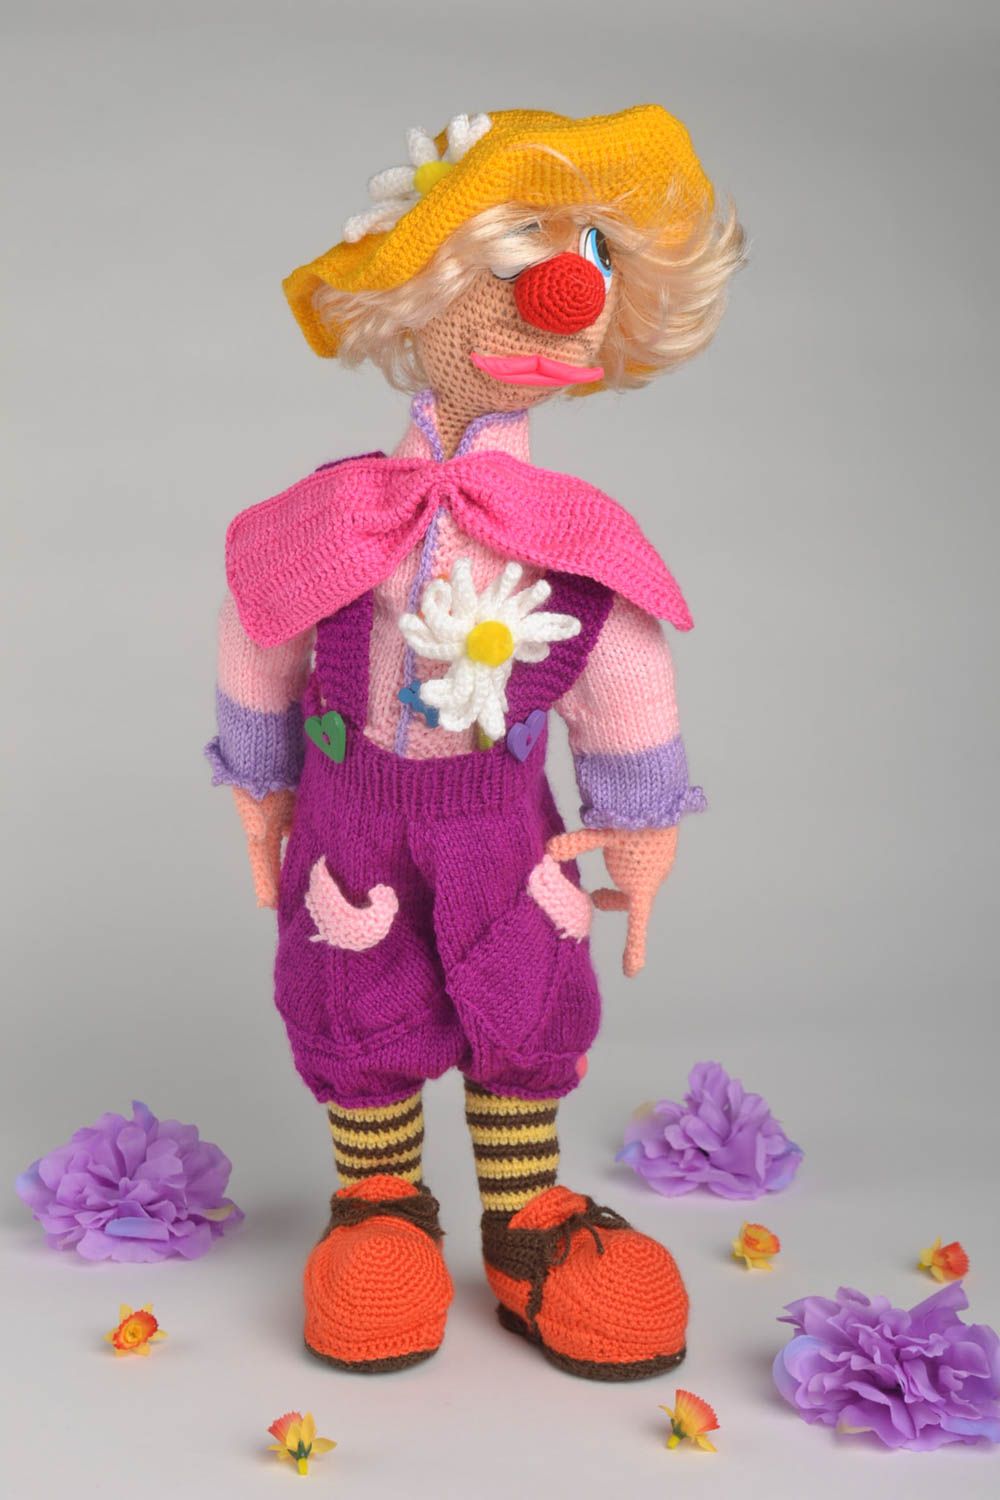 Unusual handmade crochet toy stuffed toy clown soft toy birthday gift ideas photo 1